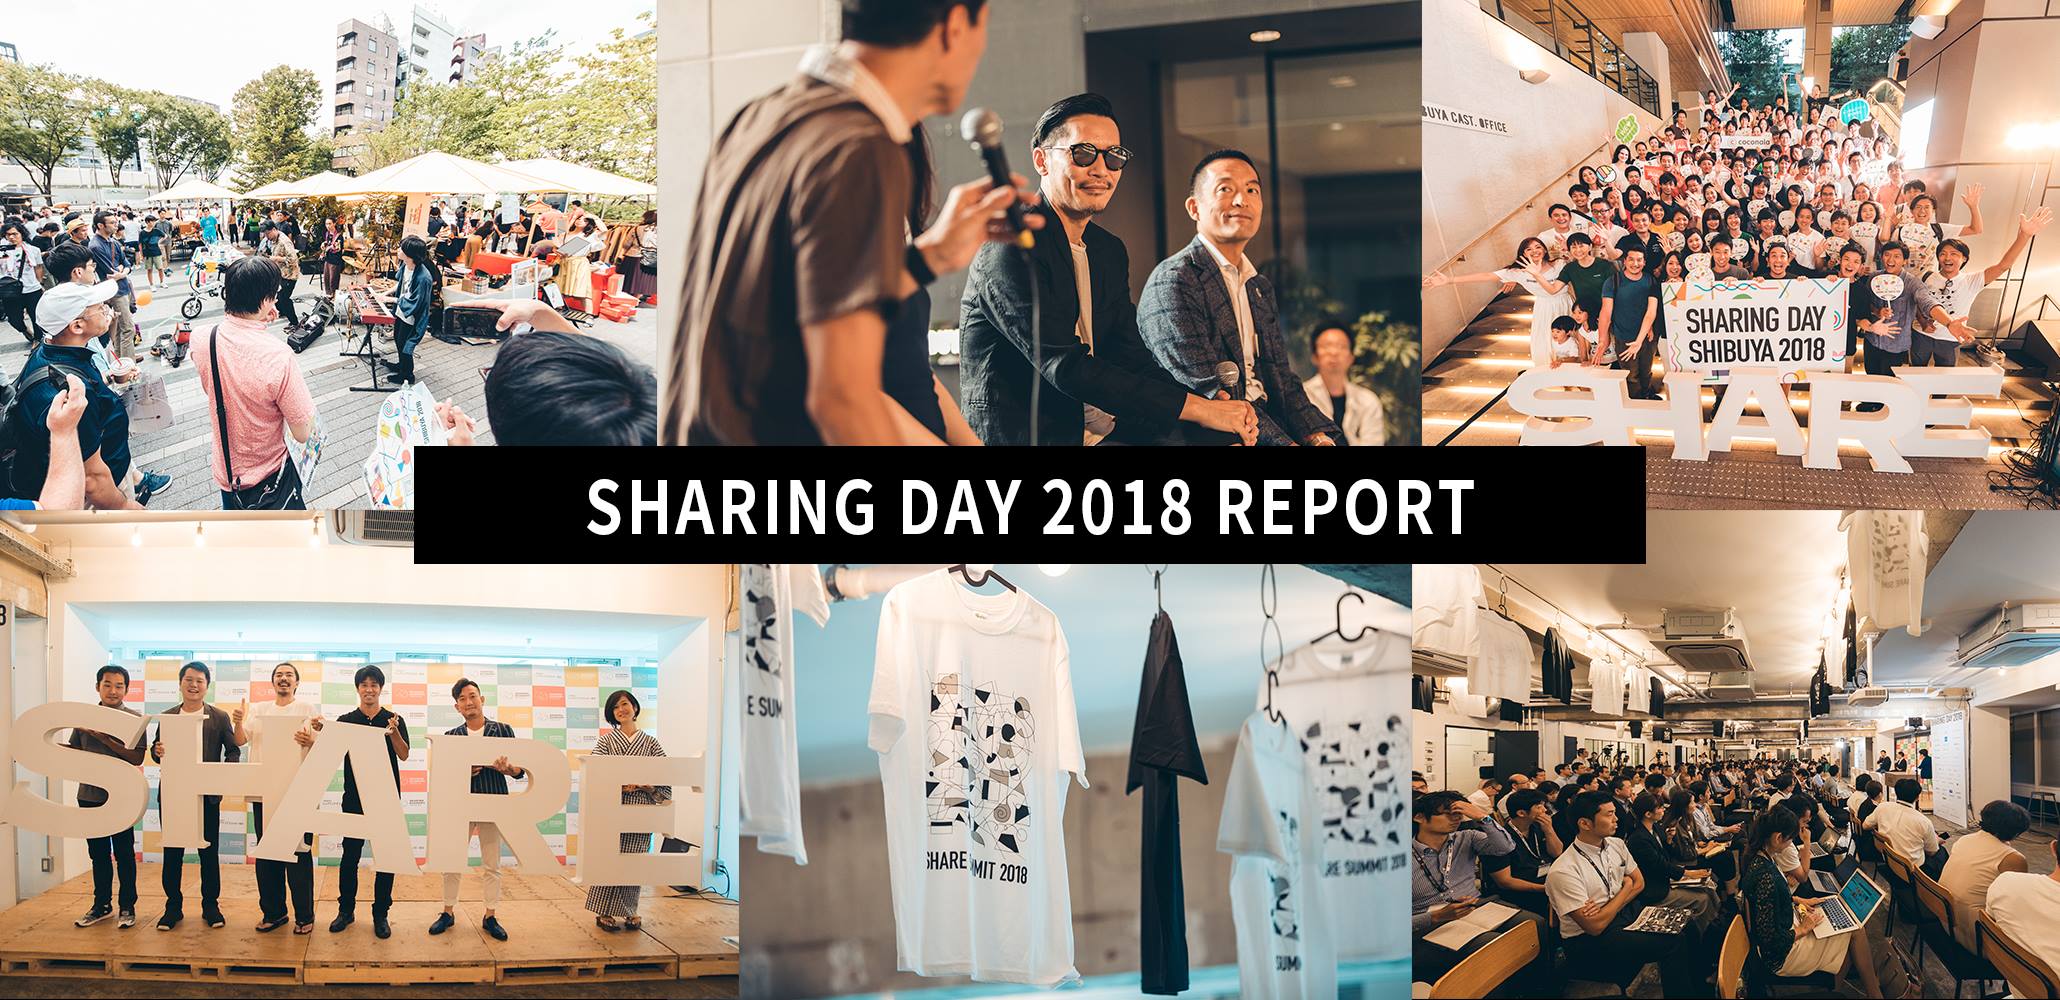 「SHARE SUMMIT 2018」「SHARING DAY SHIBUYA 2018」を開催しました！